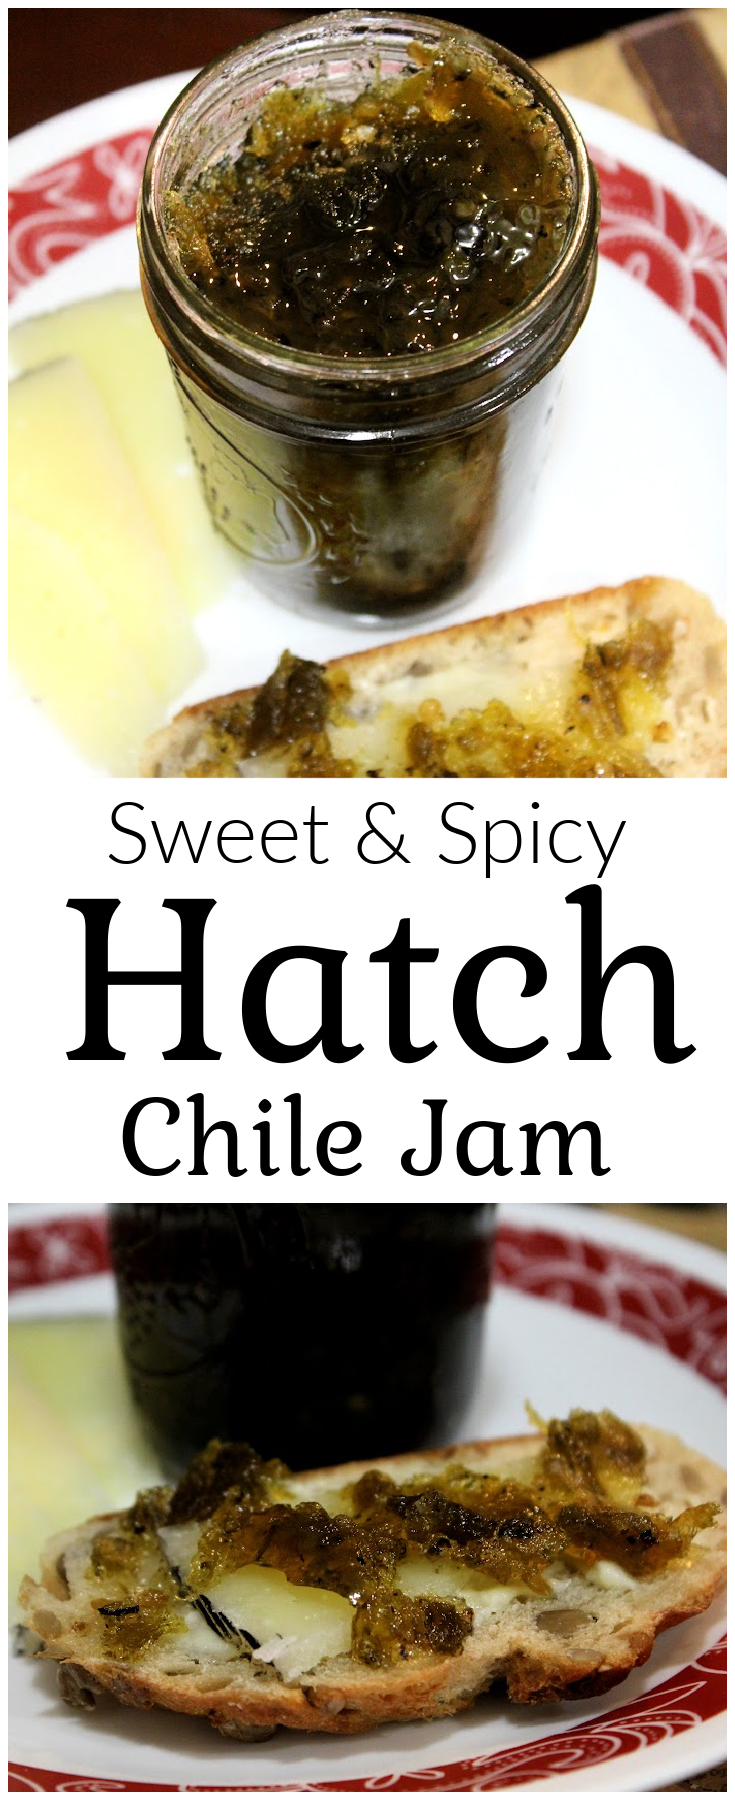 Hatch Chile Jam